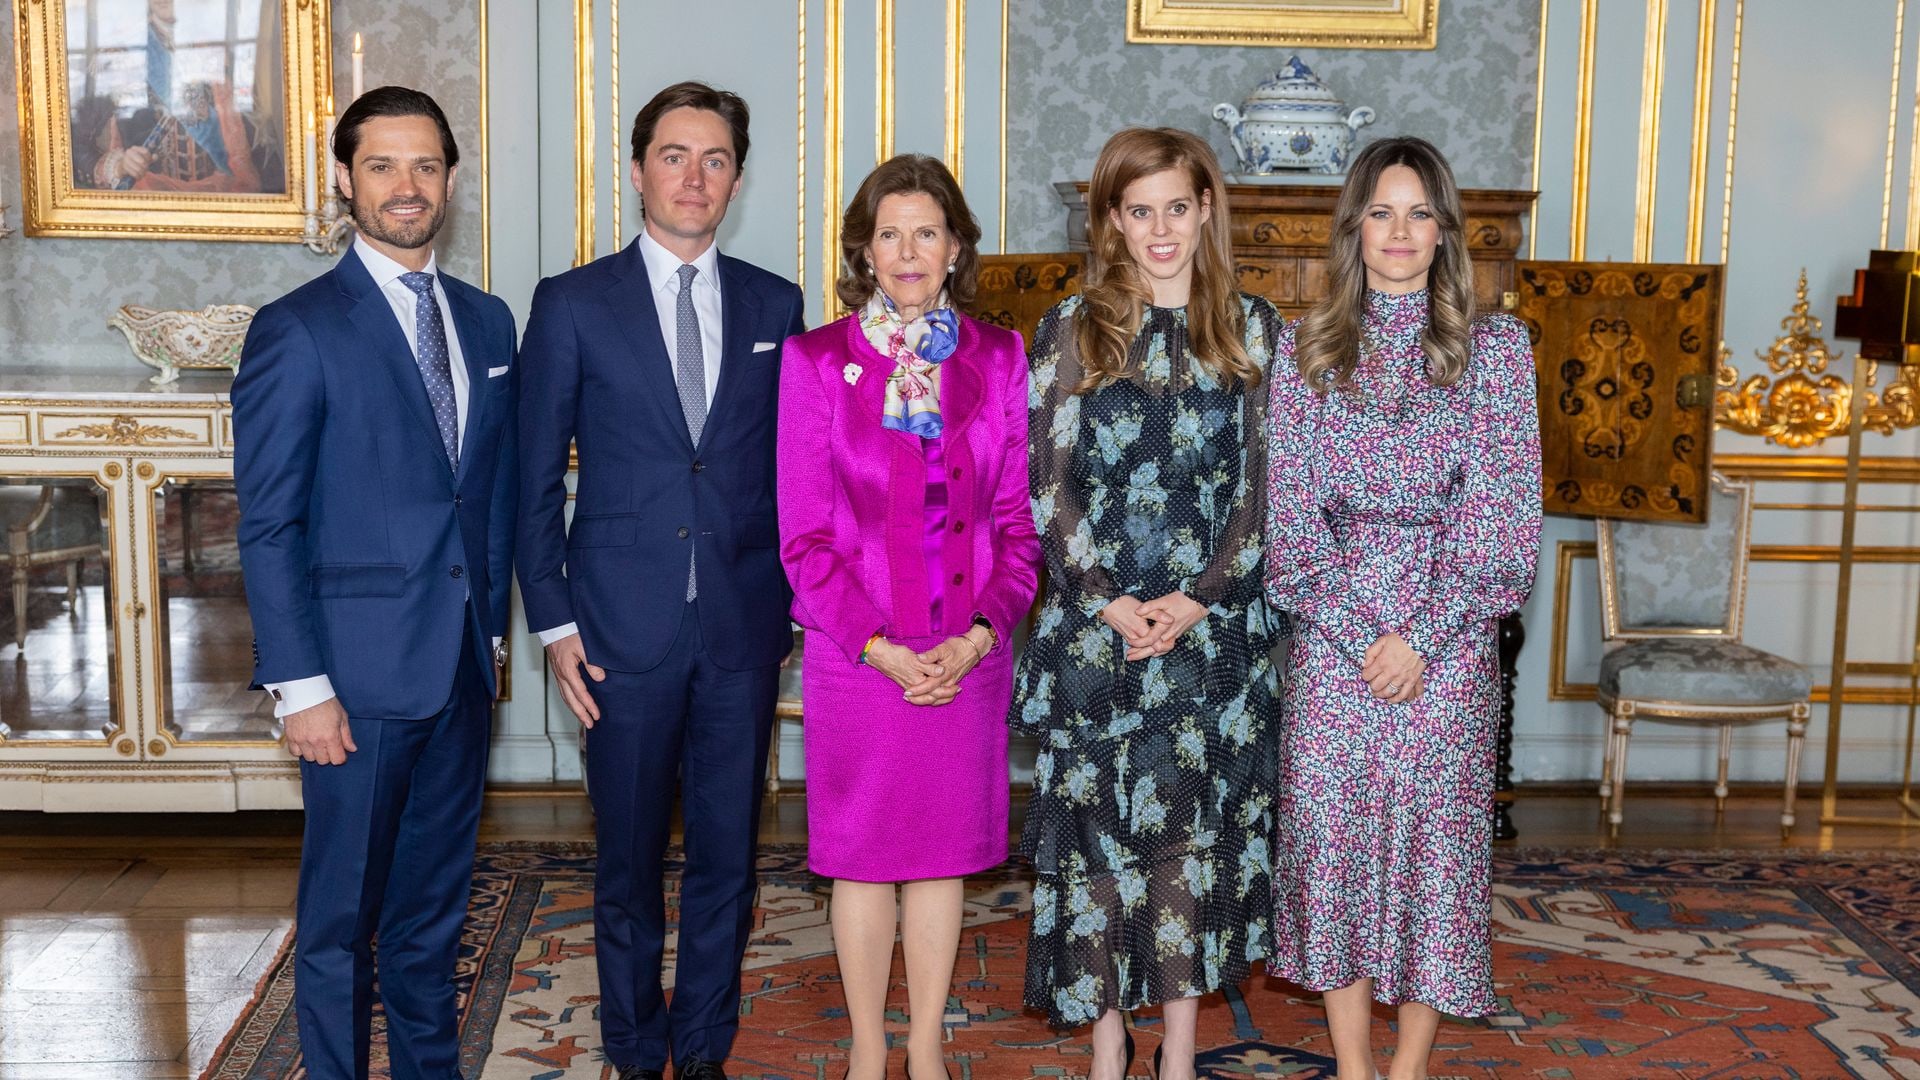 Prince Carl Philip, Edoardo Mapelli Mozzi, Queen Silvia, Princess Beatrice and Princess Sofia